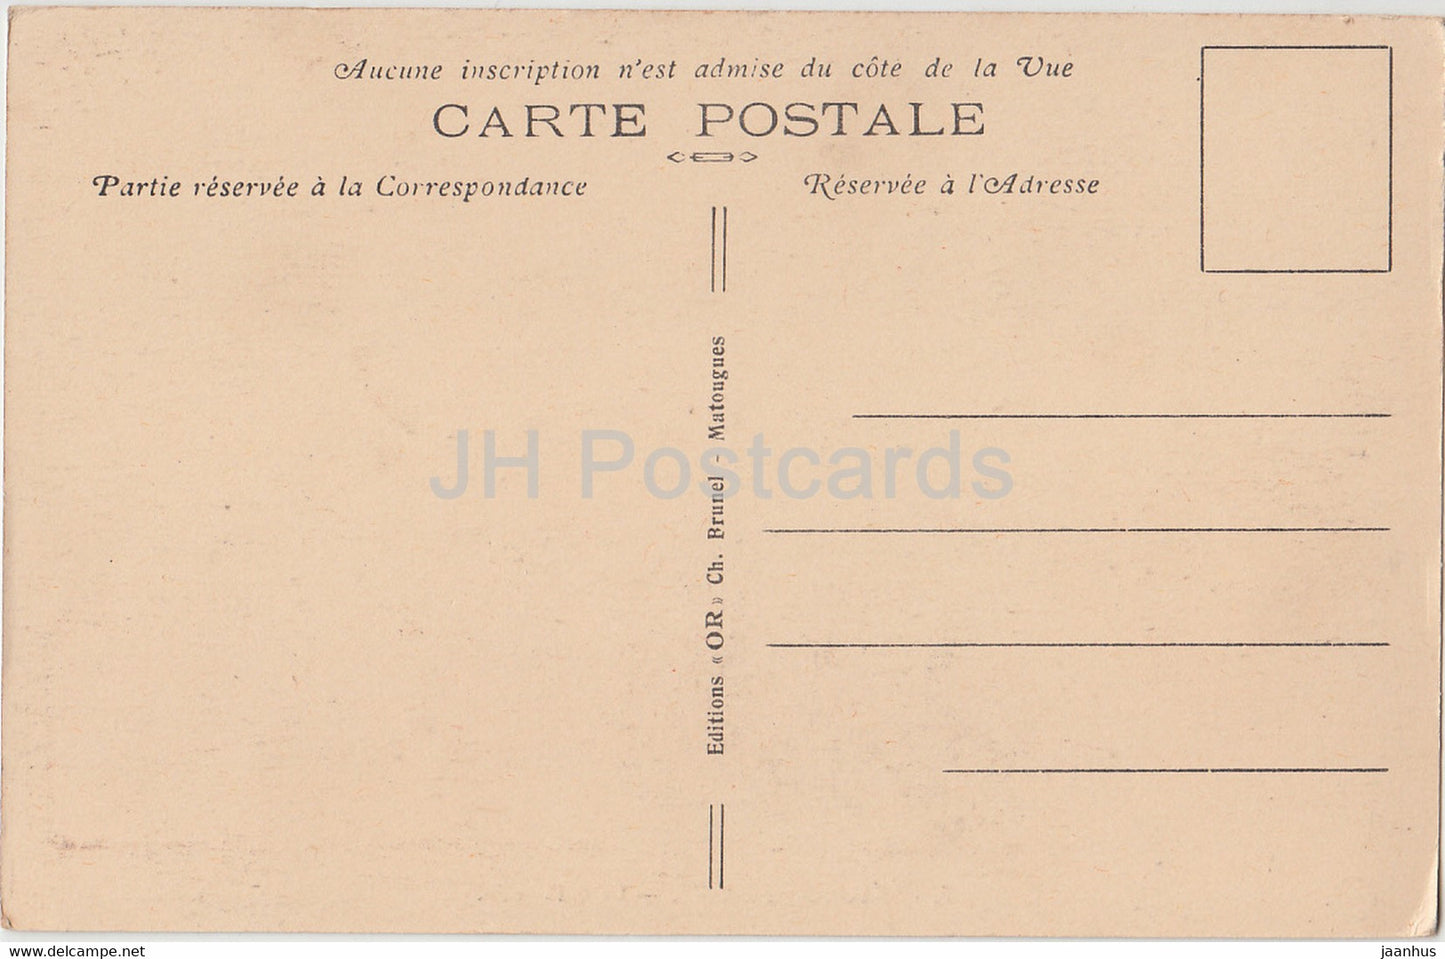 Chalons sur Marne - La Cathedrale - Kathedrale - 3 - alte Postkarte - Frankreich - unbenutzt